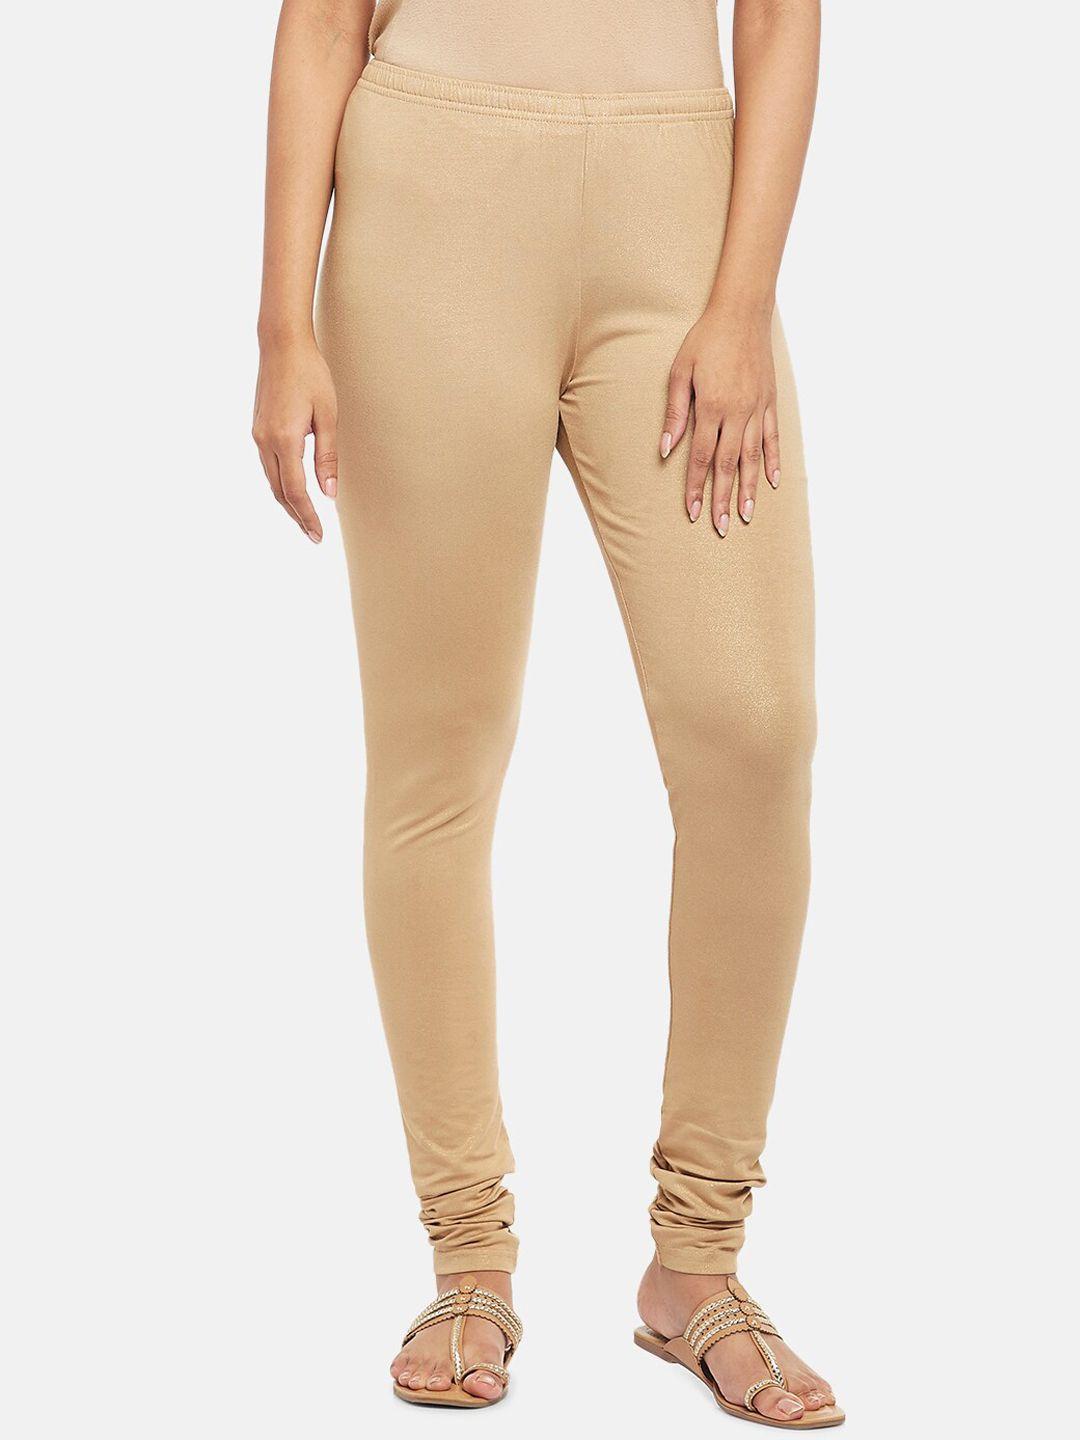 rangmanch by pantaloons gold-toned solid leggings